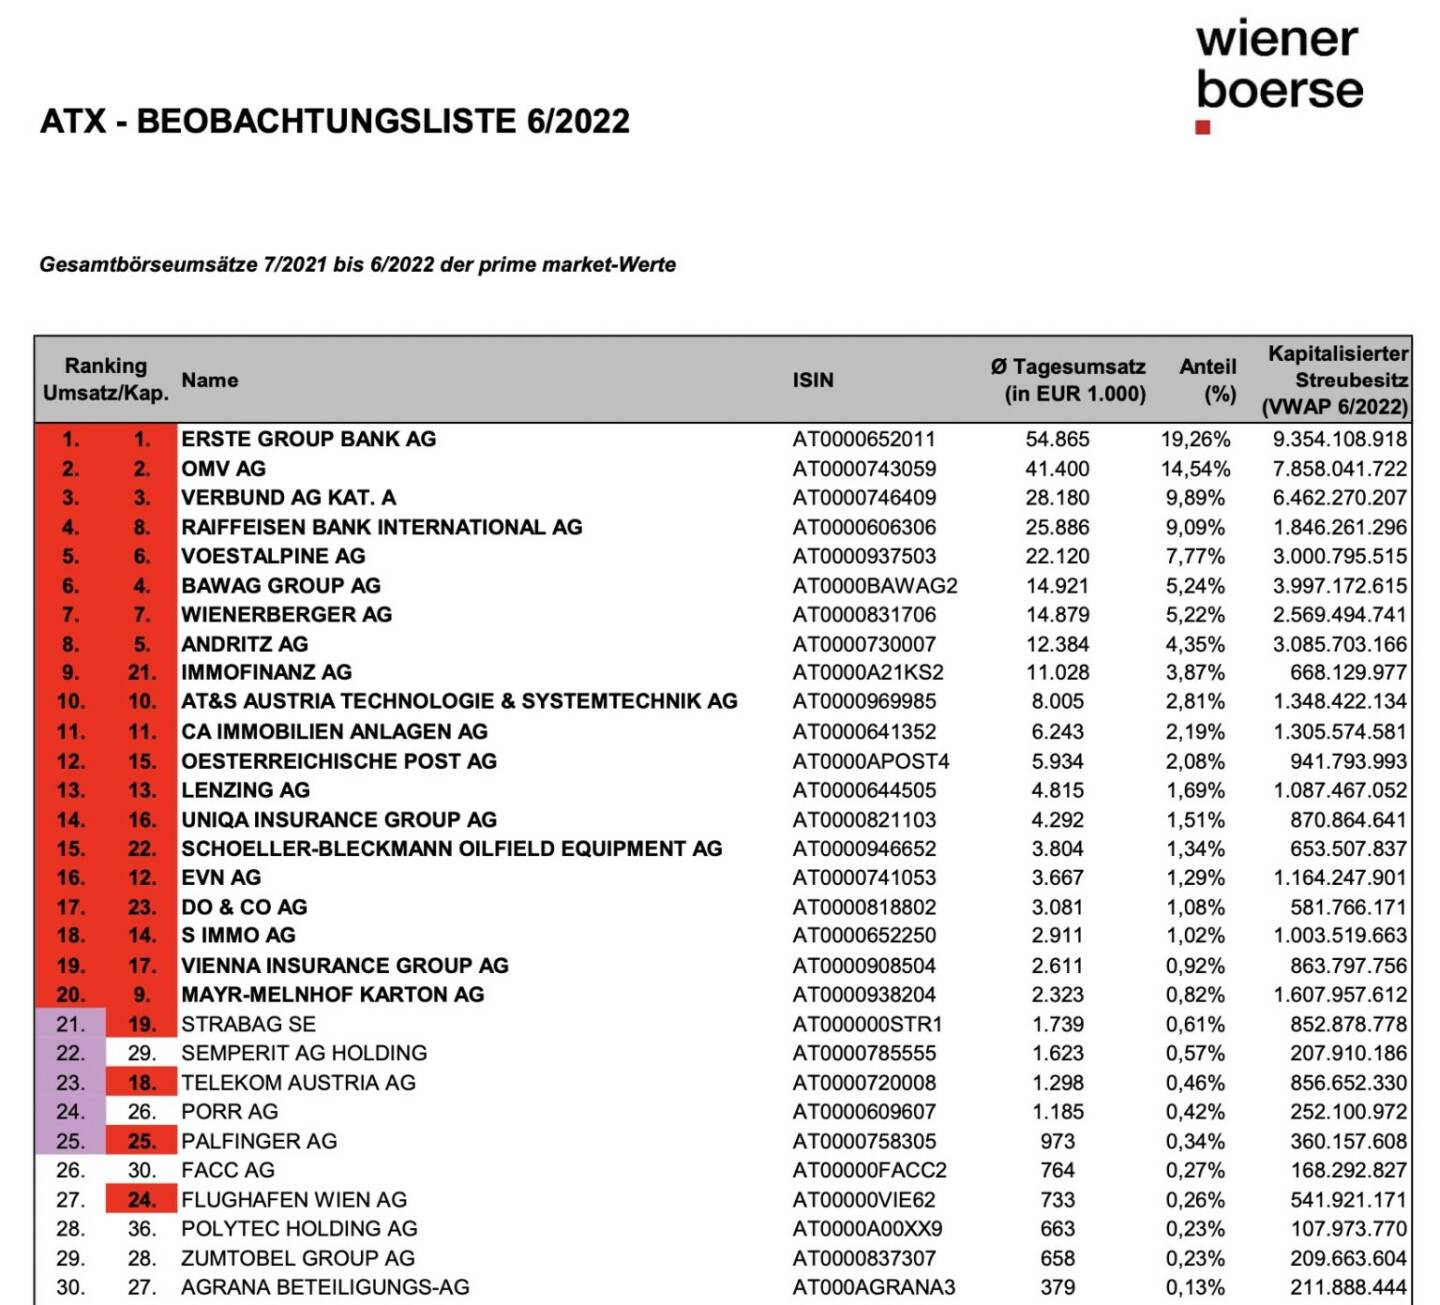 ATX Beobachtungsliste 6/2022 (c) Wiener Börse